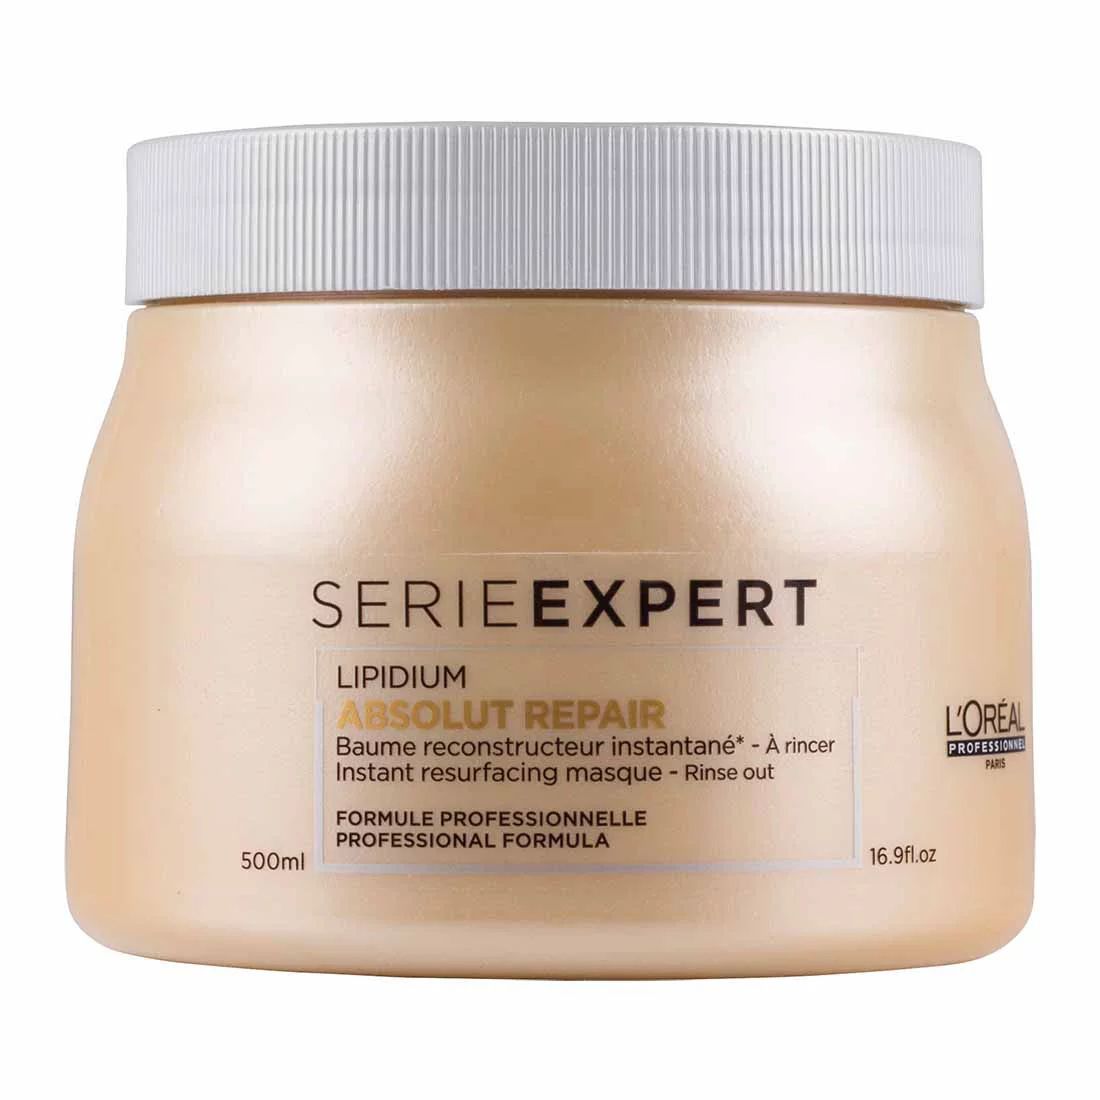 LOreal Expert Serie Lipidium Absolut Repair Masque 16.9oz/500ml | Walmart (US)